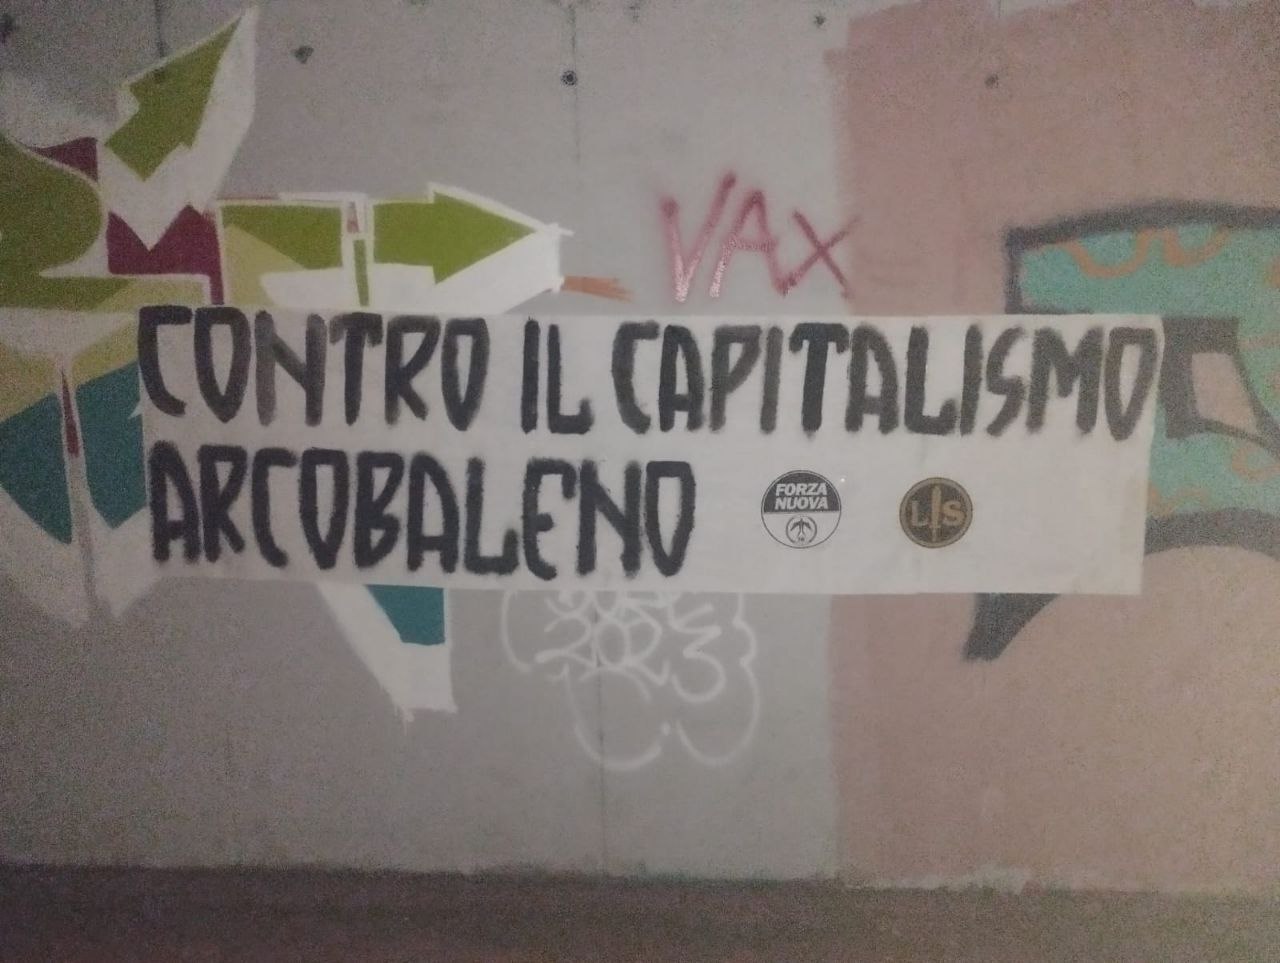 Contro Capitalismo Arcobaleno